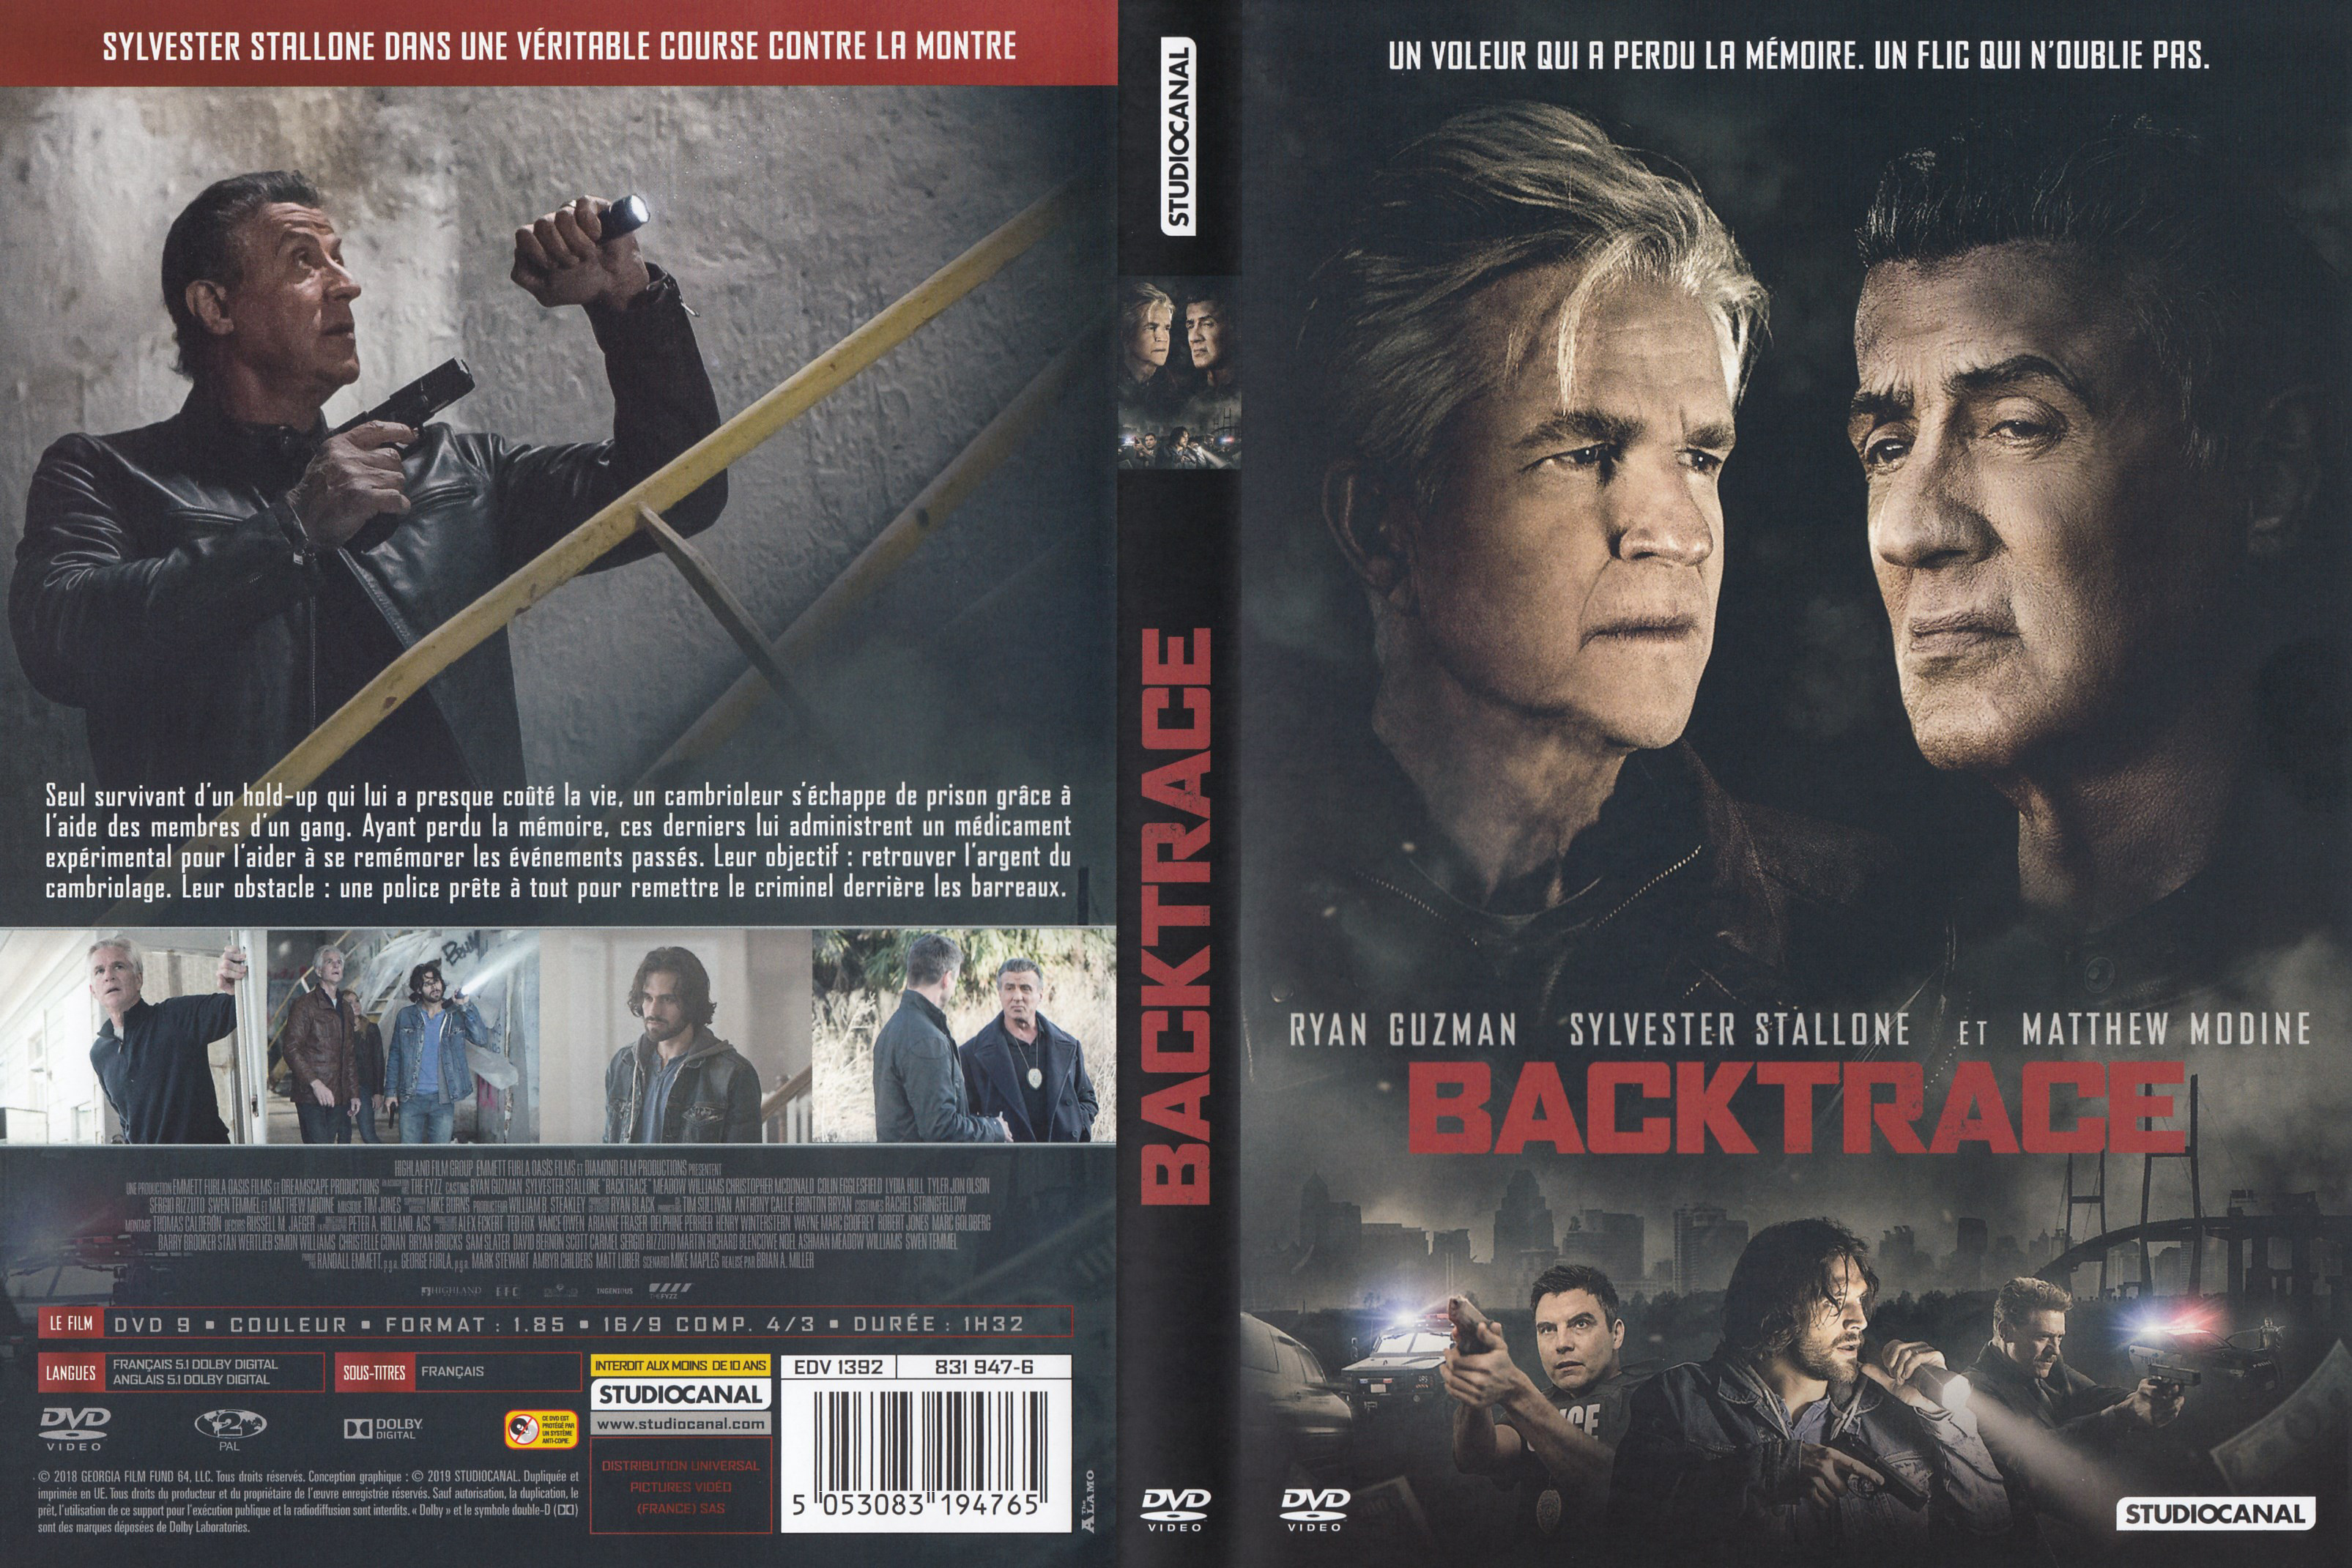 Jaquette DVD Backtrace